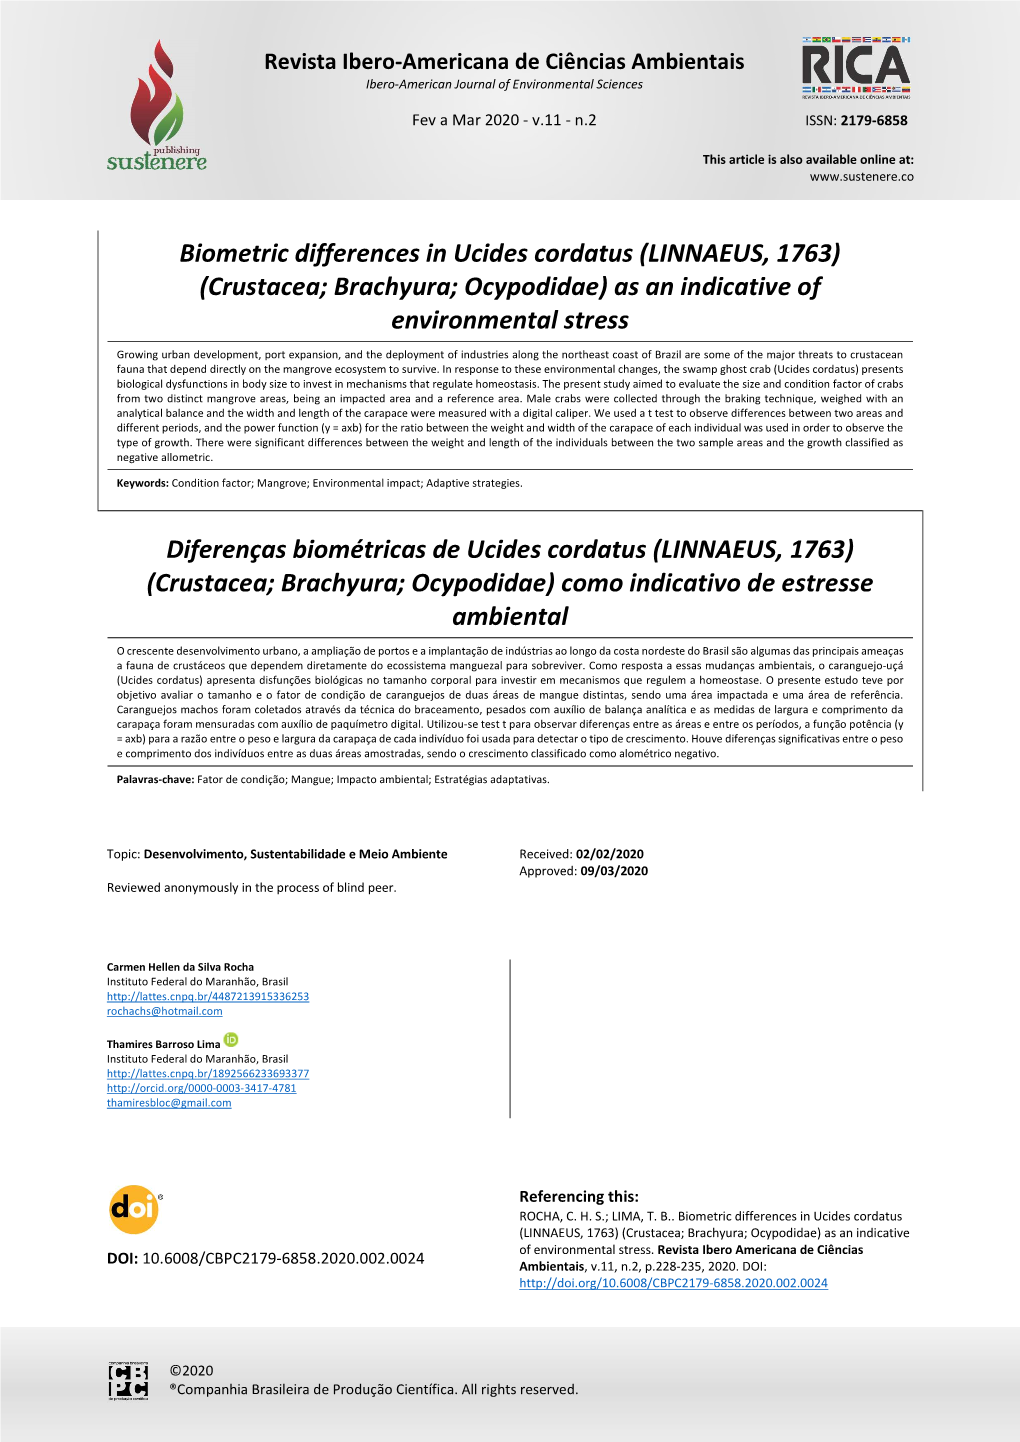 Biometric Differences in Ucides Cordatus (LINNAEUS, 1763) (Crustacea; Brachyura; Ocypodidae) As an Indicative of Environmental Stress